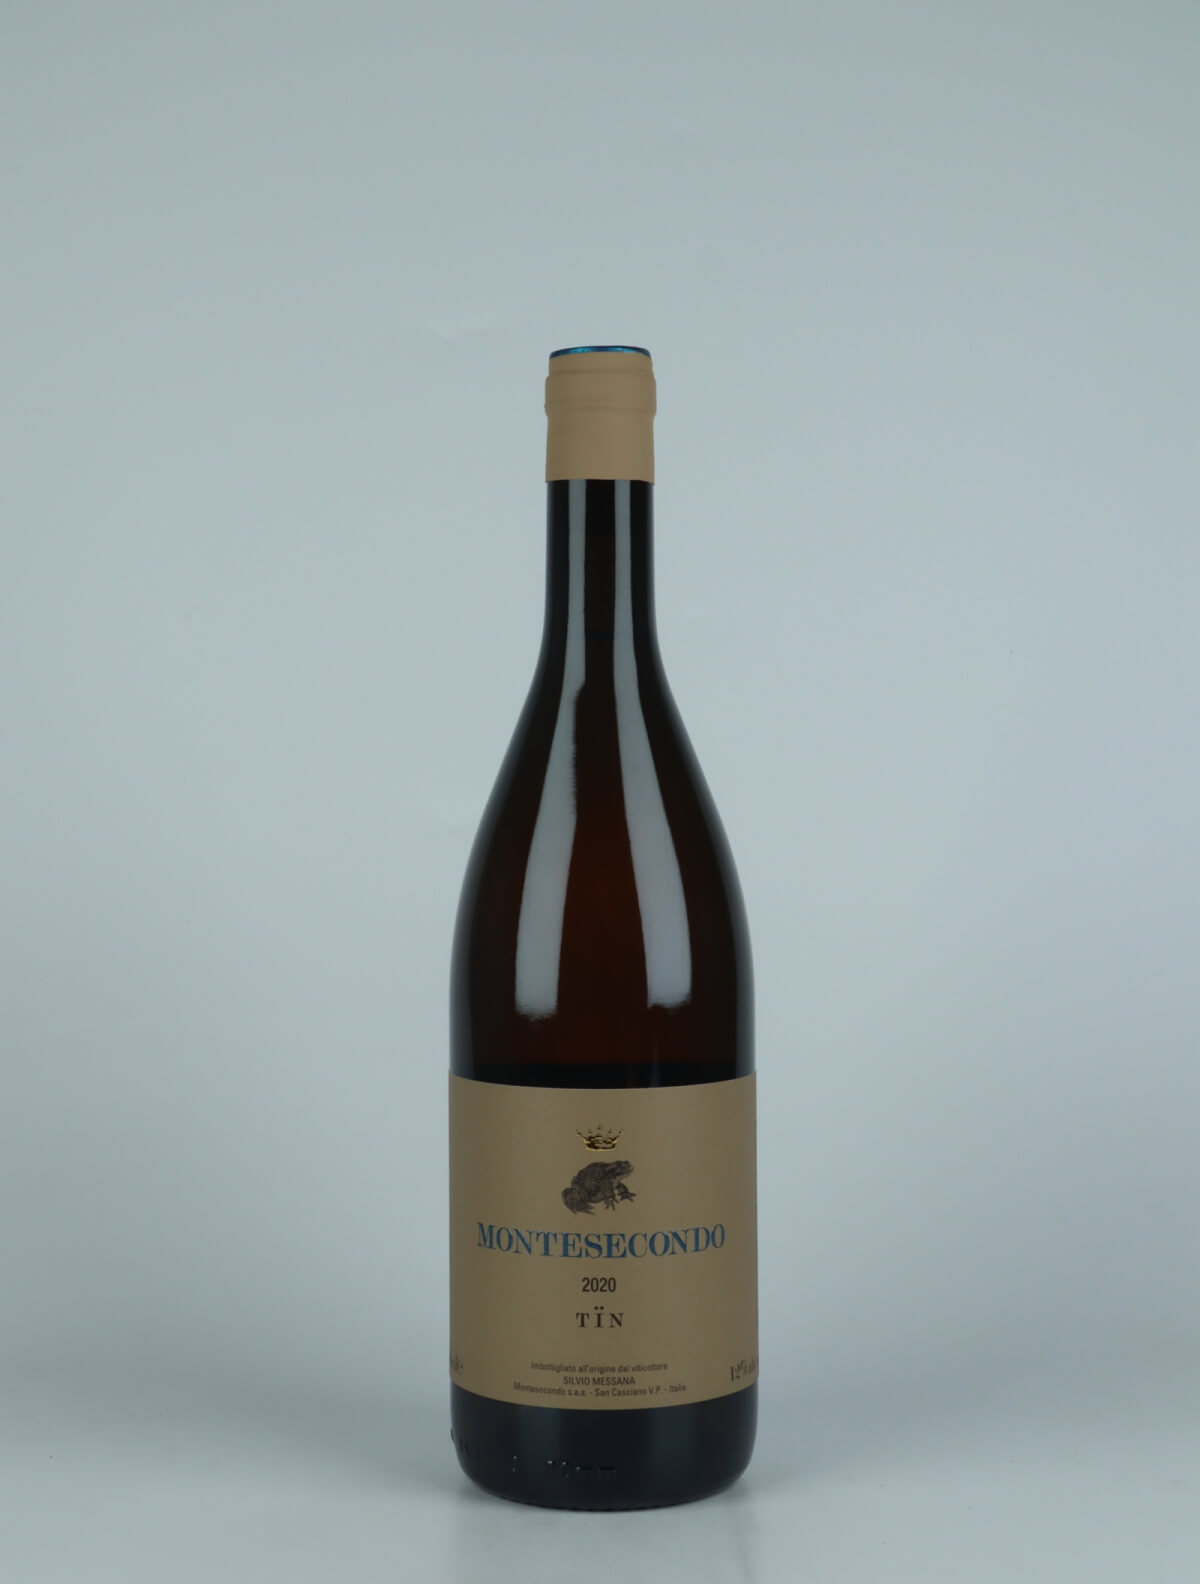 En flaske 2020 Tïn - Trebbiano Orange vin fra Montesecondo, Toscana i Italien